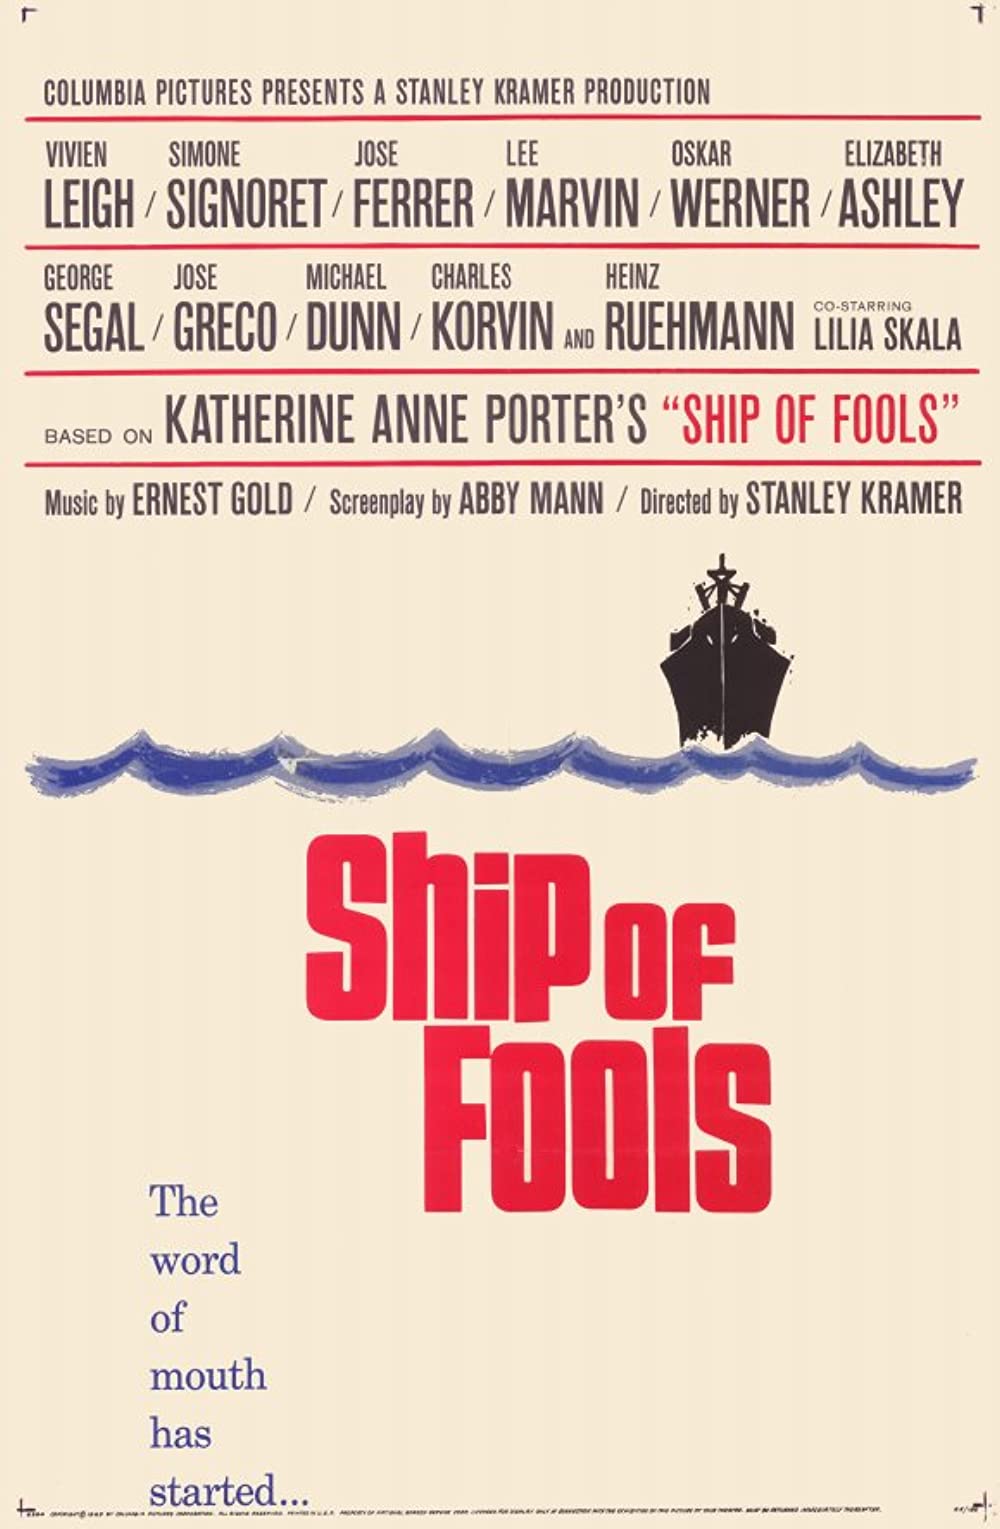 Filmbeschreibung zu Ship of Fools